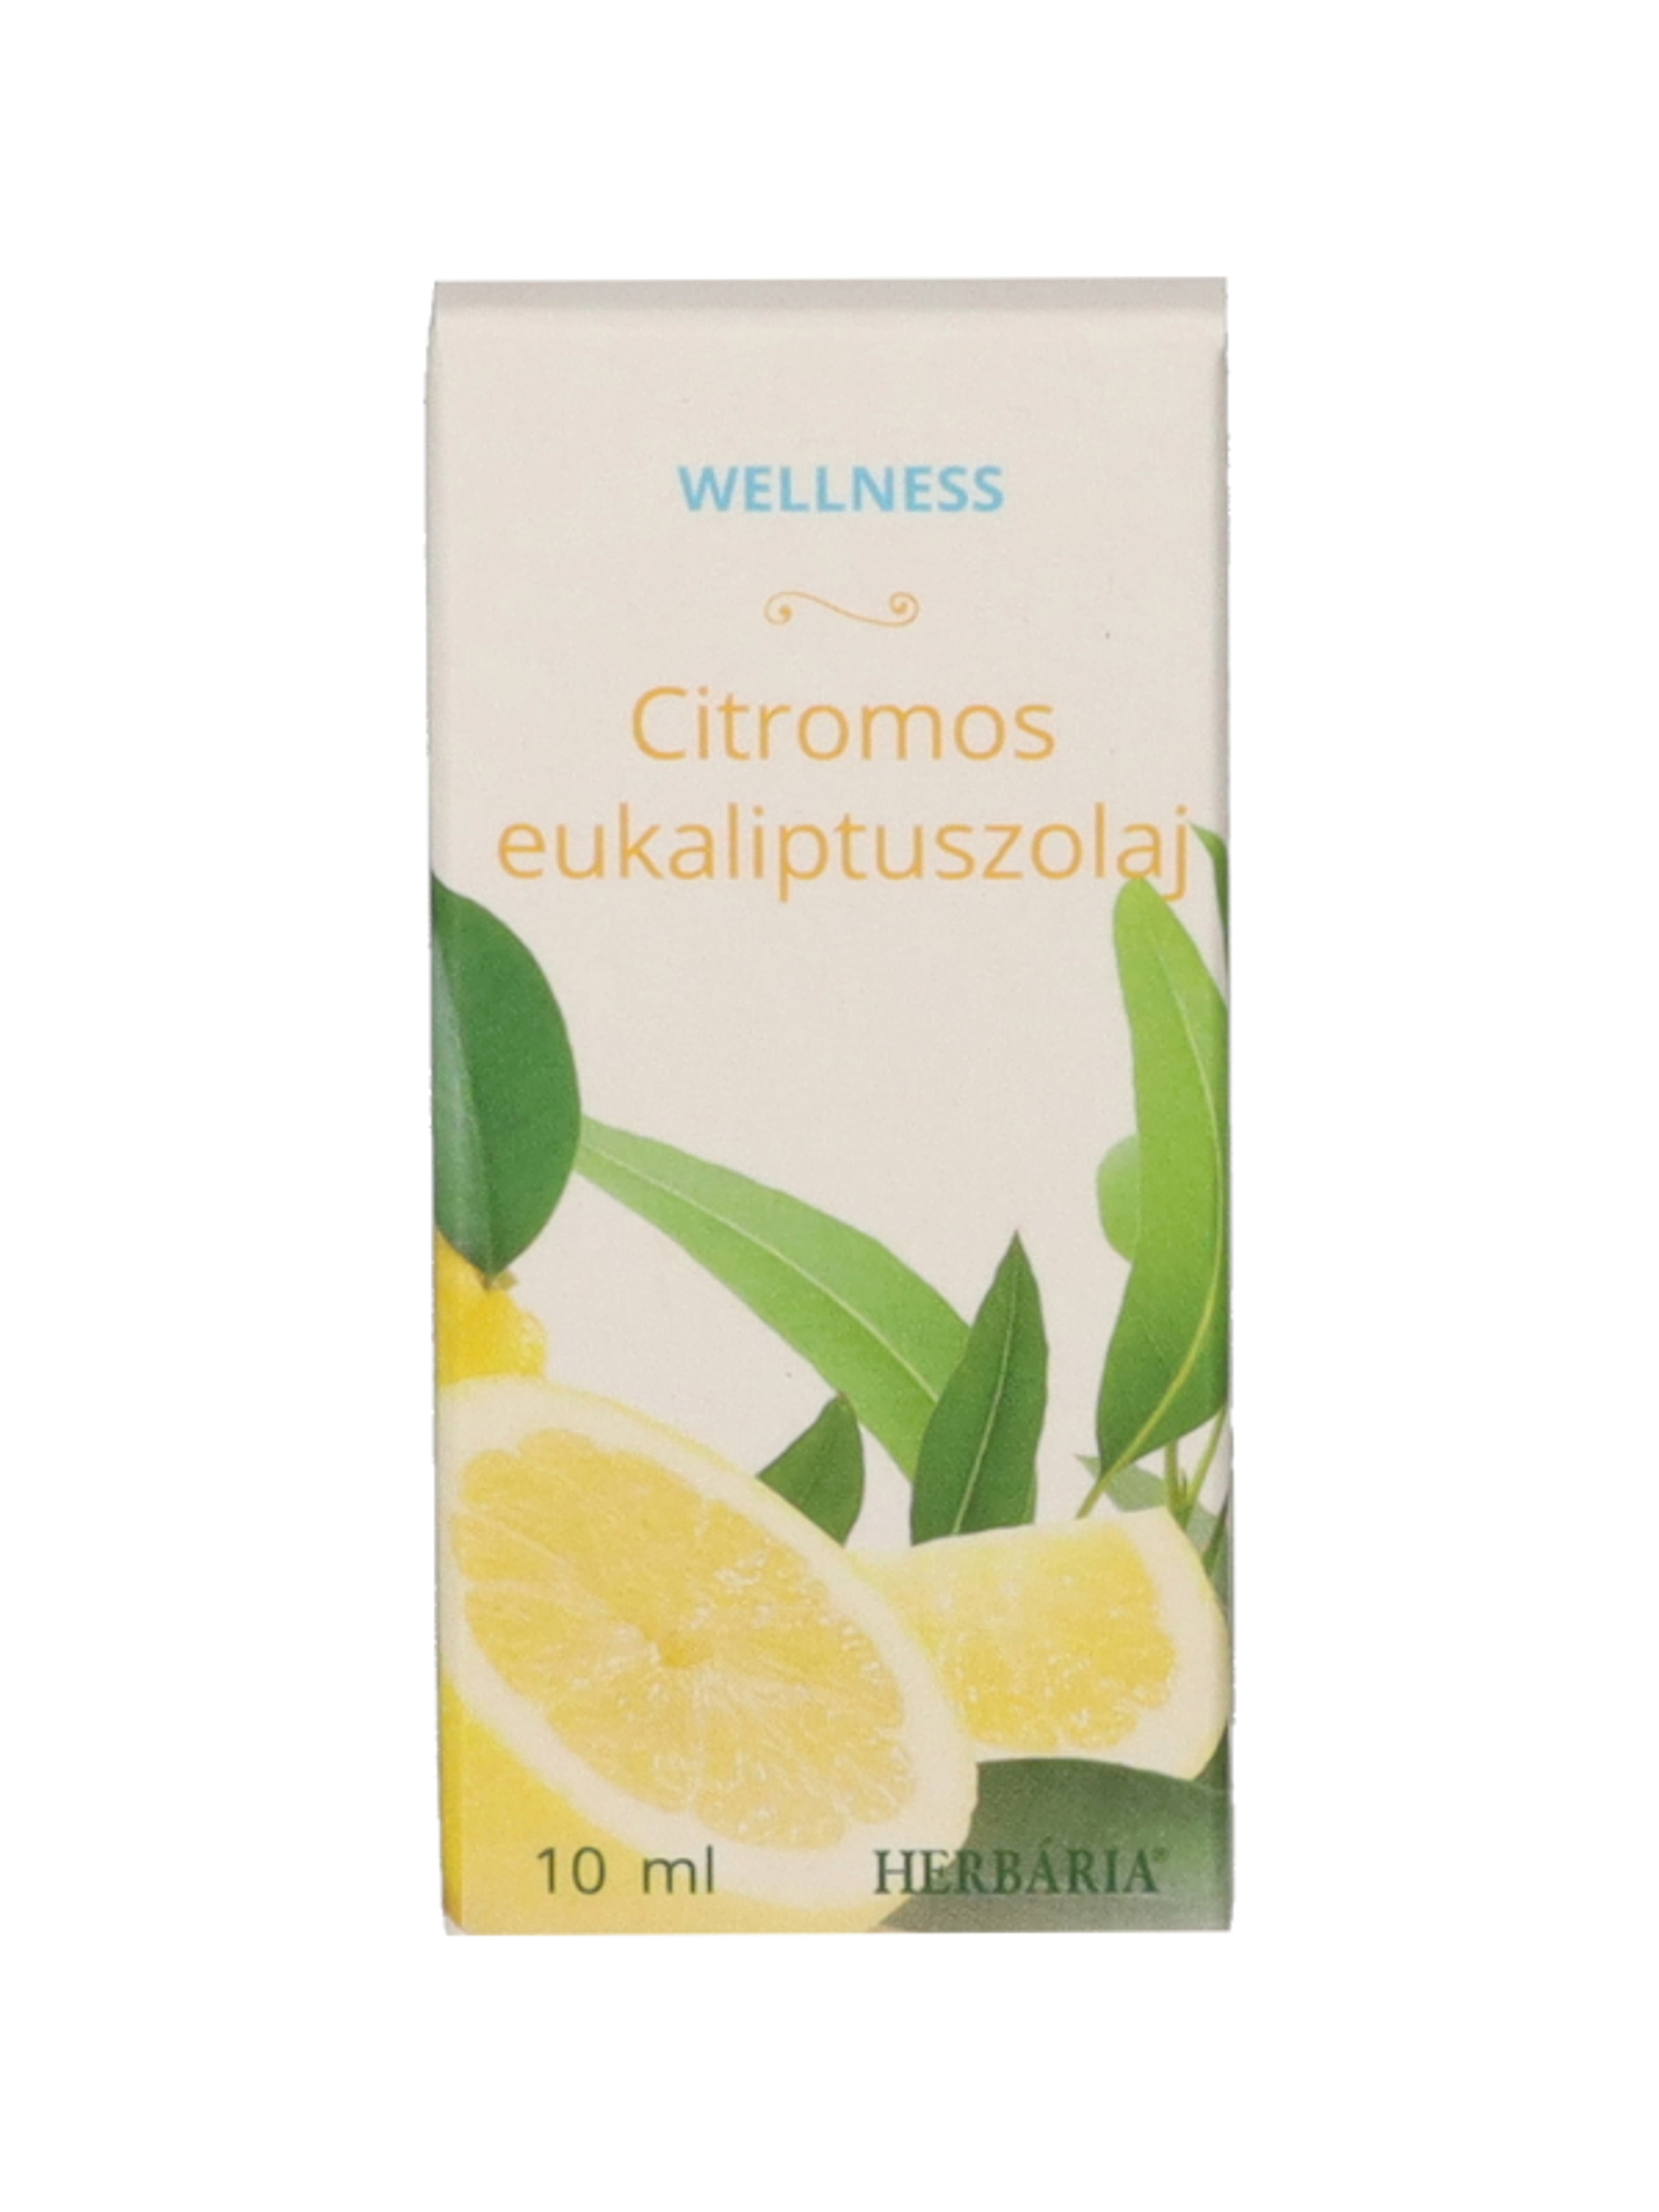 Herbaria Wellness citromos eukliptuszolaj - 10 ml-1